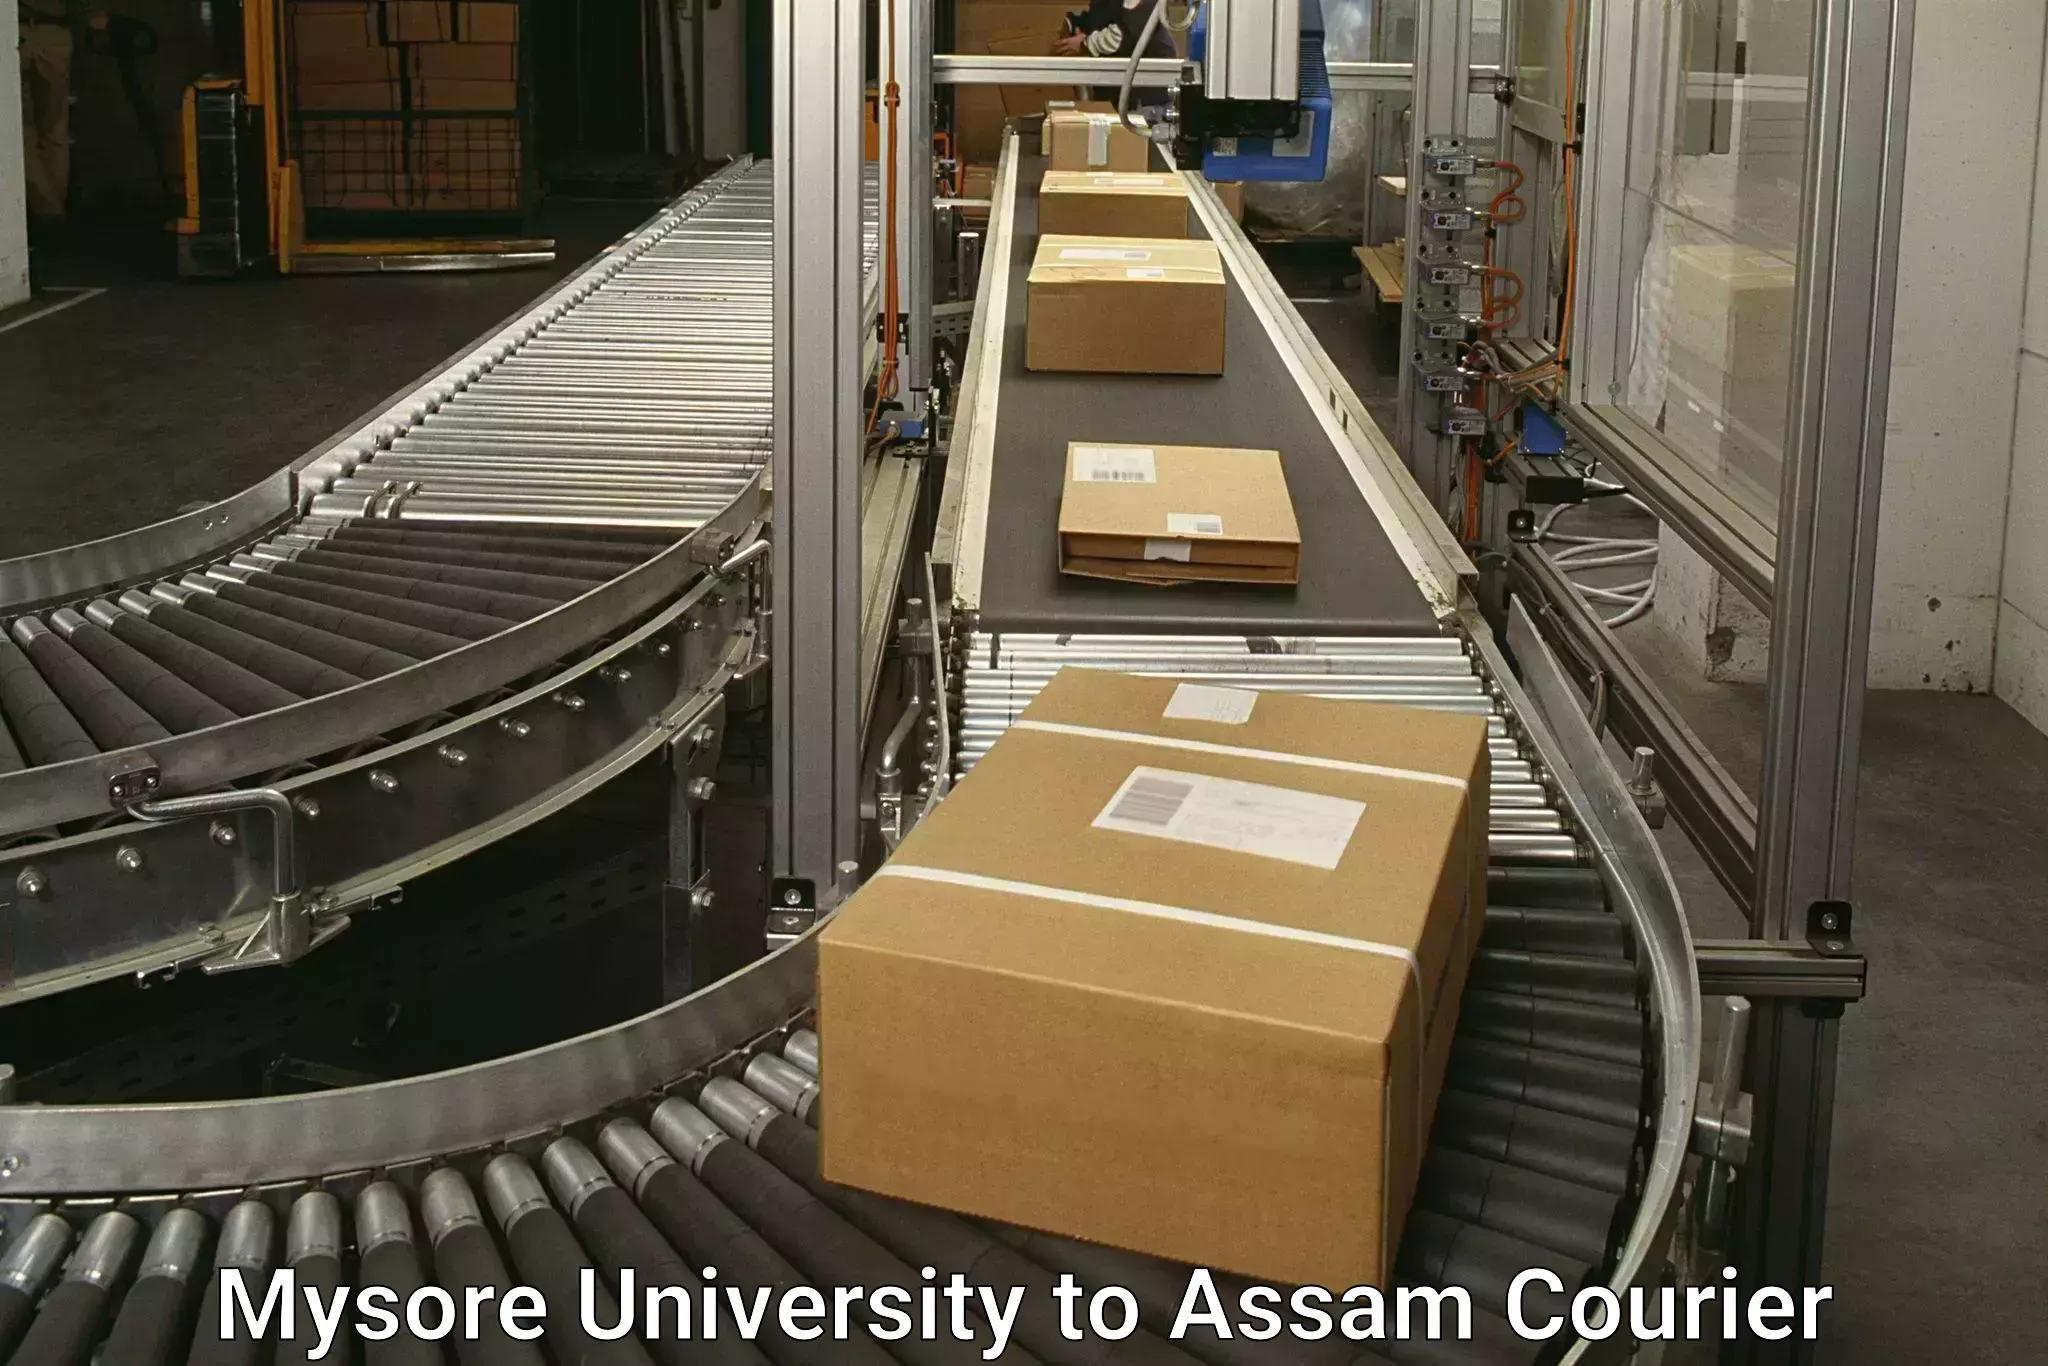 Reliable courier service Mysore University to Assam